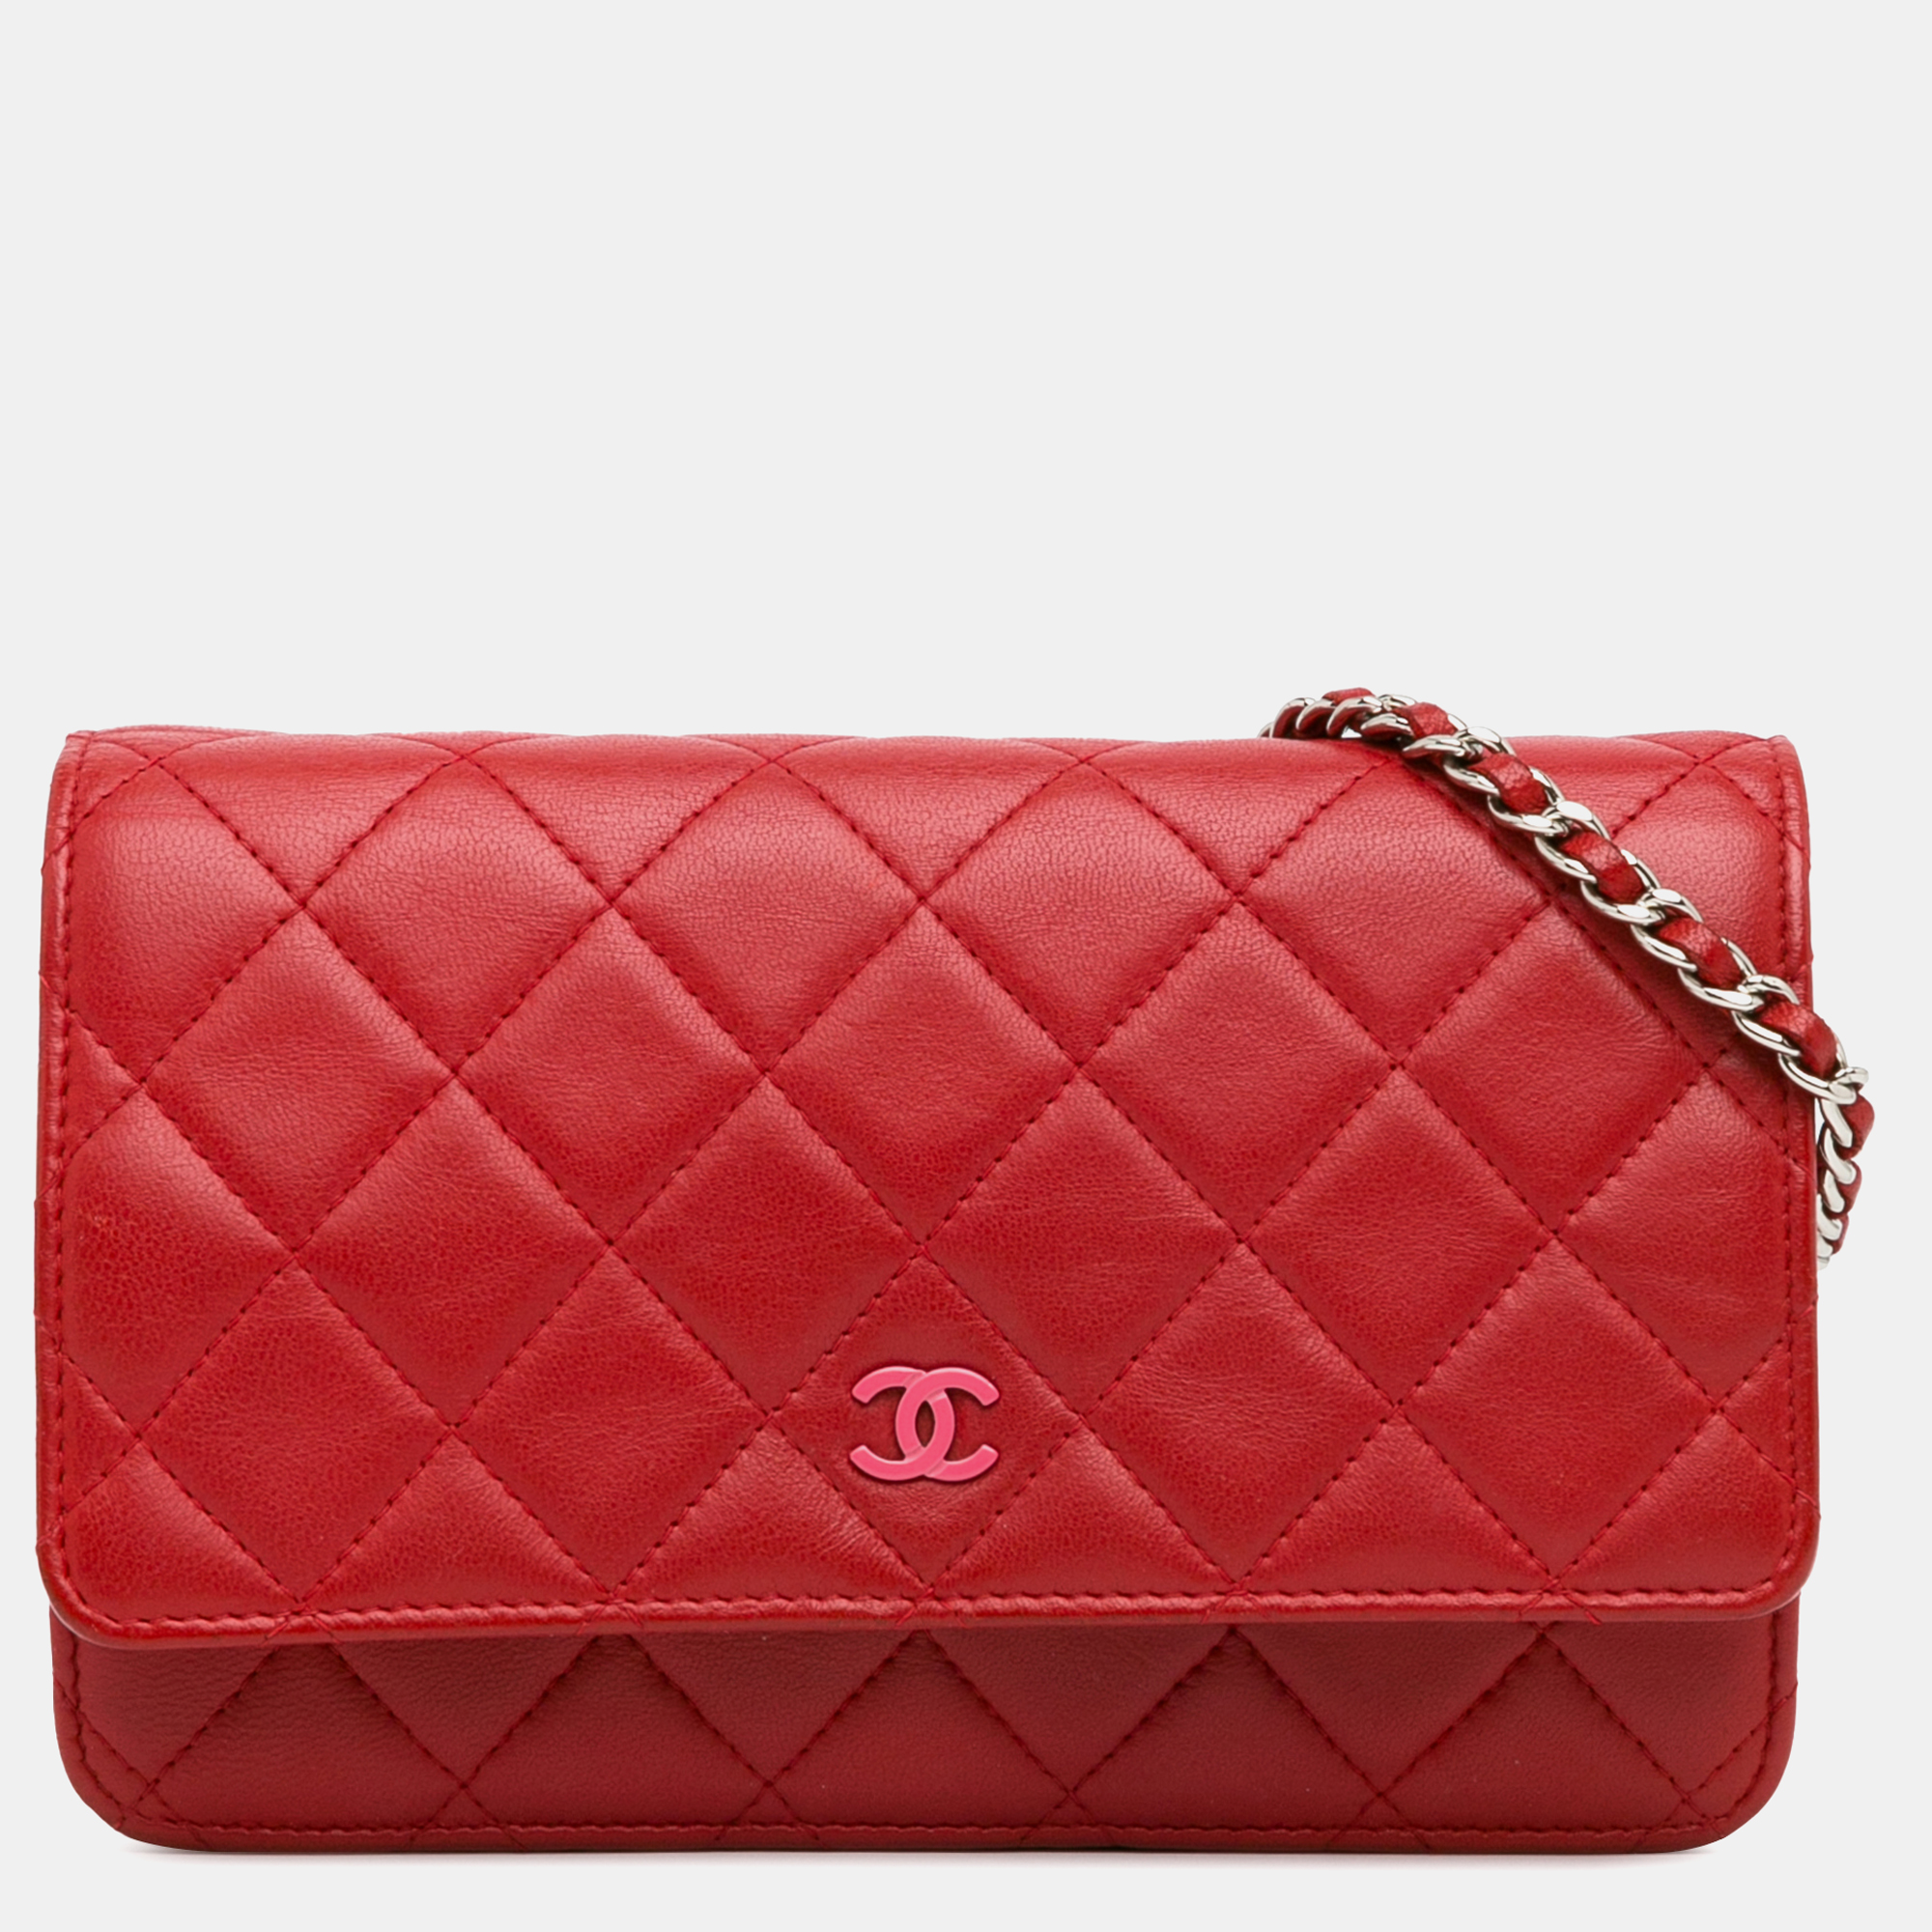 Chanel classic lambskin wallet on chain